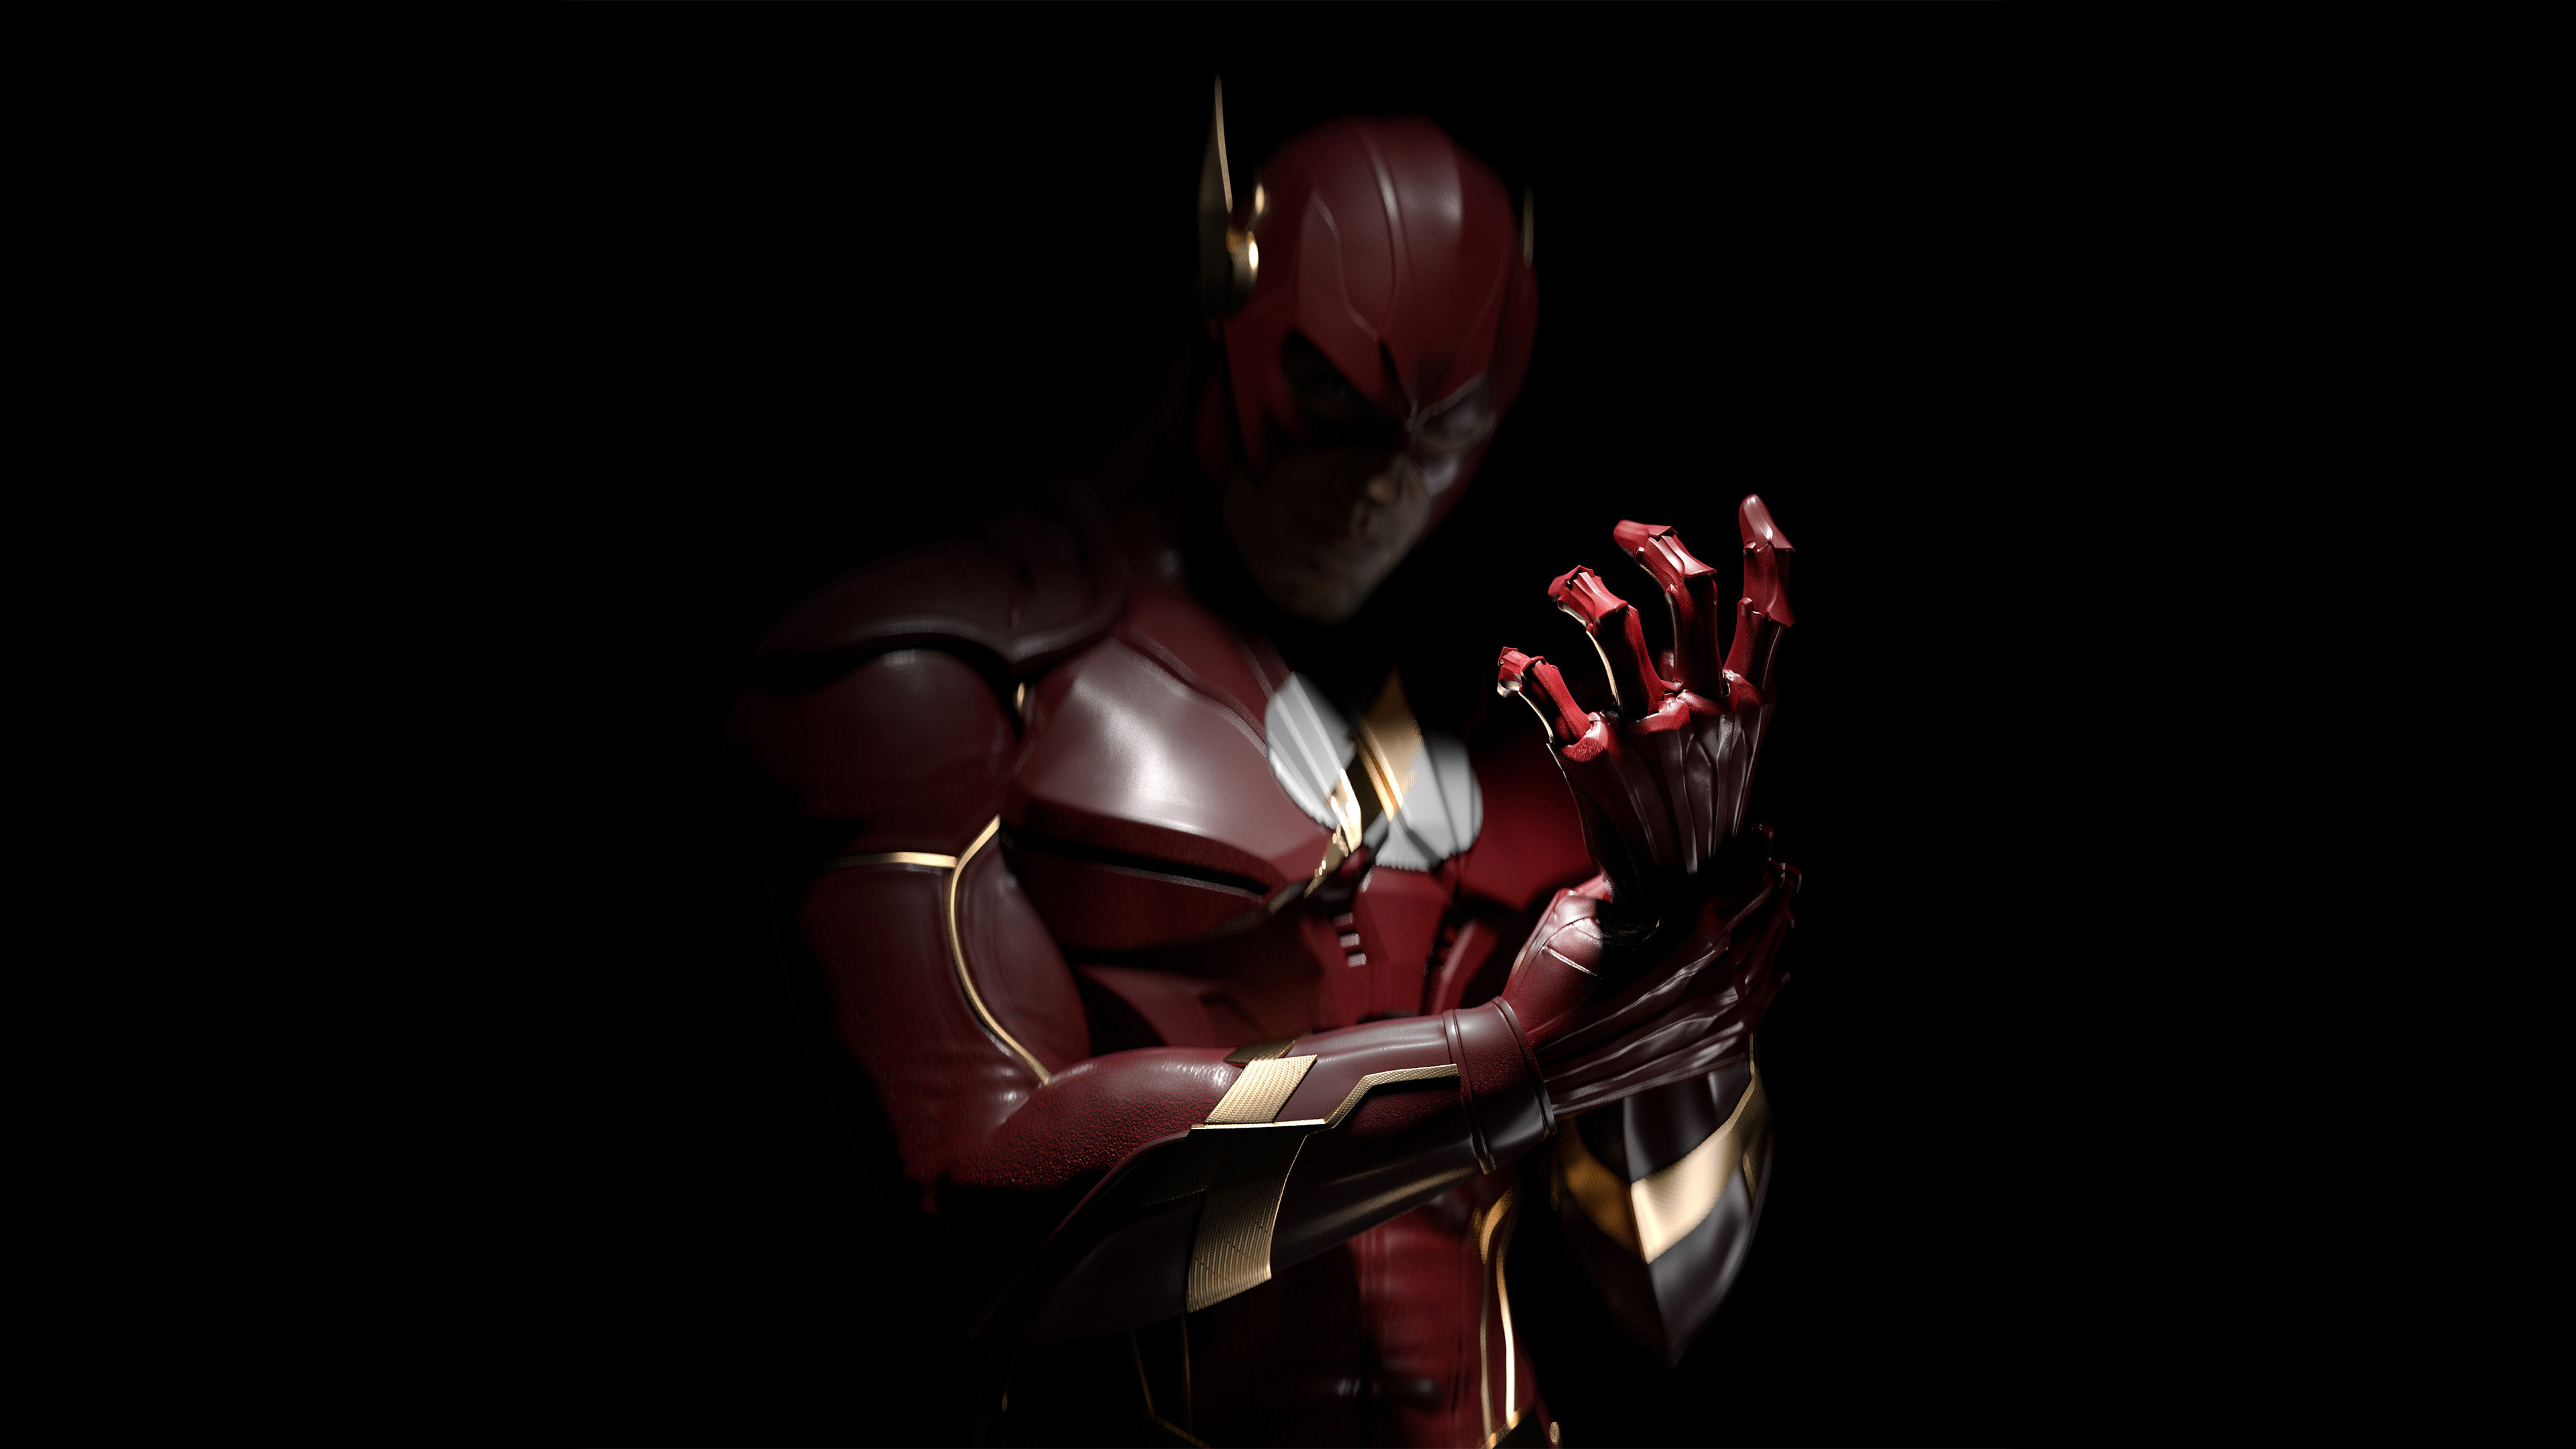 General 3840x2160 Injustice 2 DC Comics The Flash bodysuit superhero black background simple background minimalism